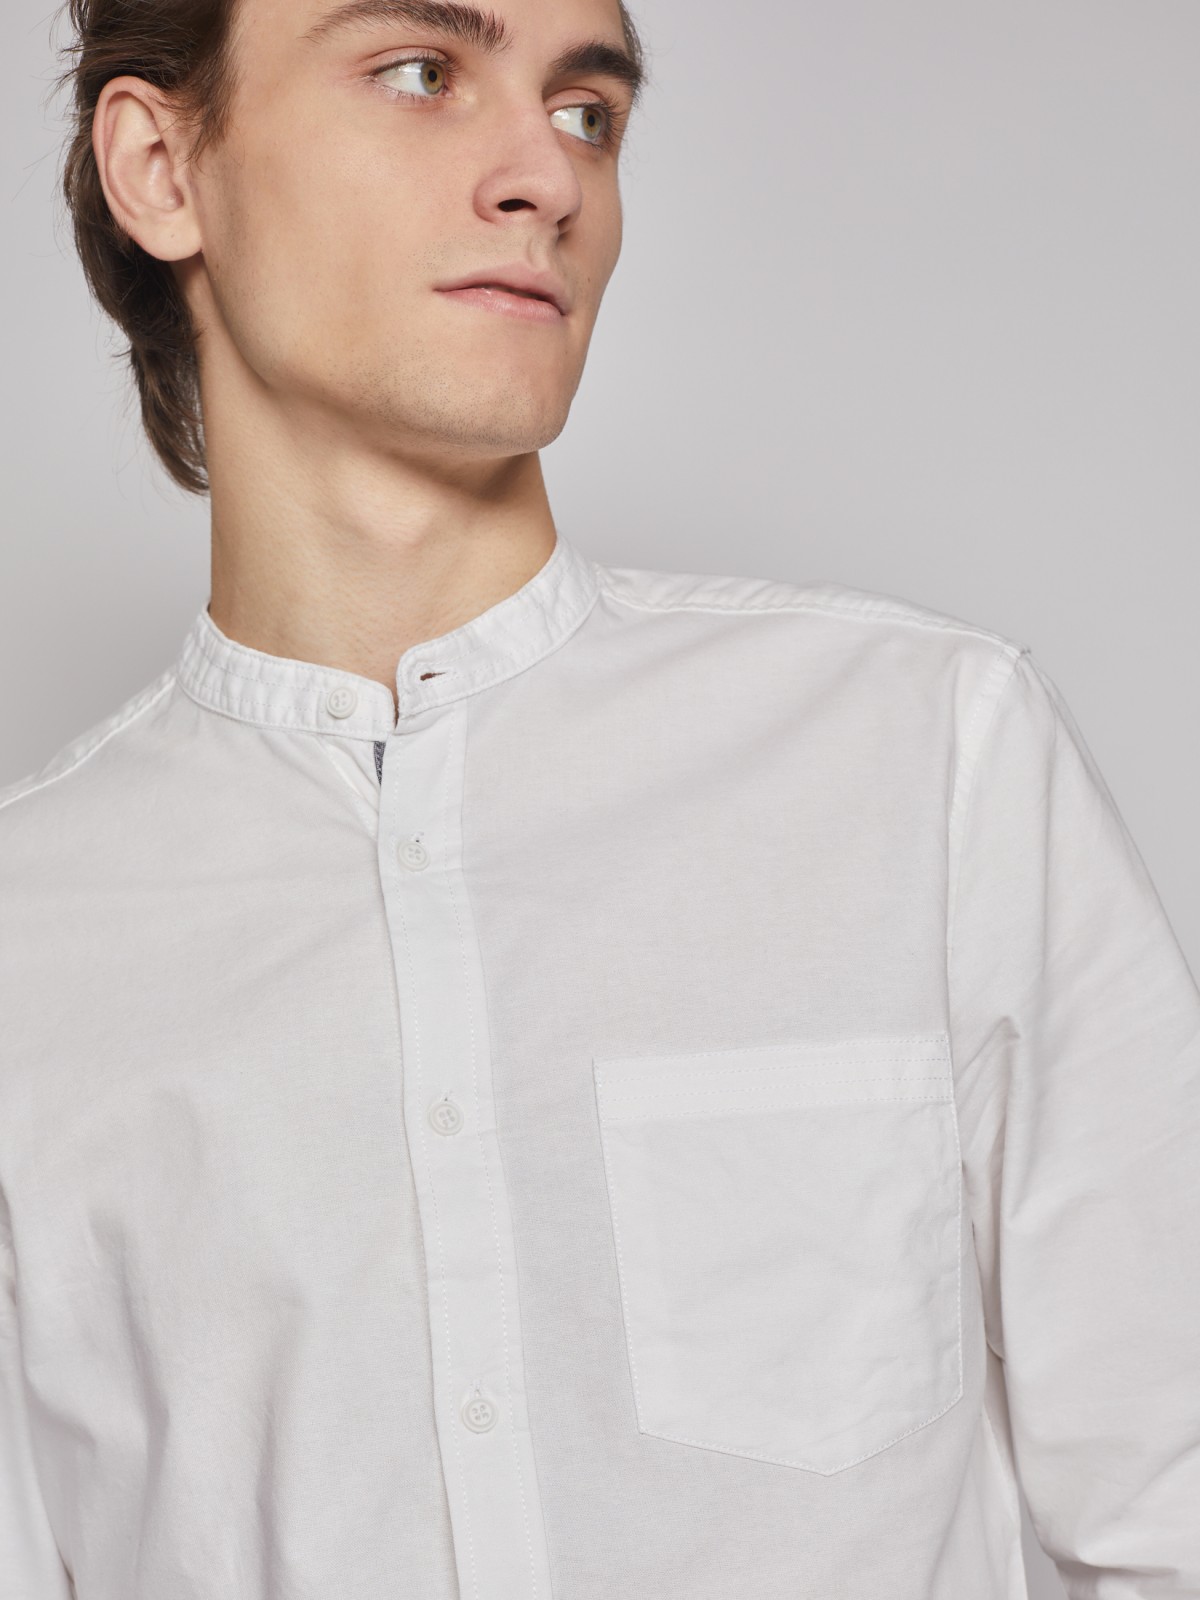 Хлопковая рубашка без воротника zolla 21312214R013, цвет белый, размер S - фото 6